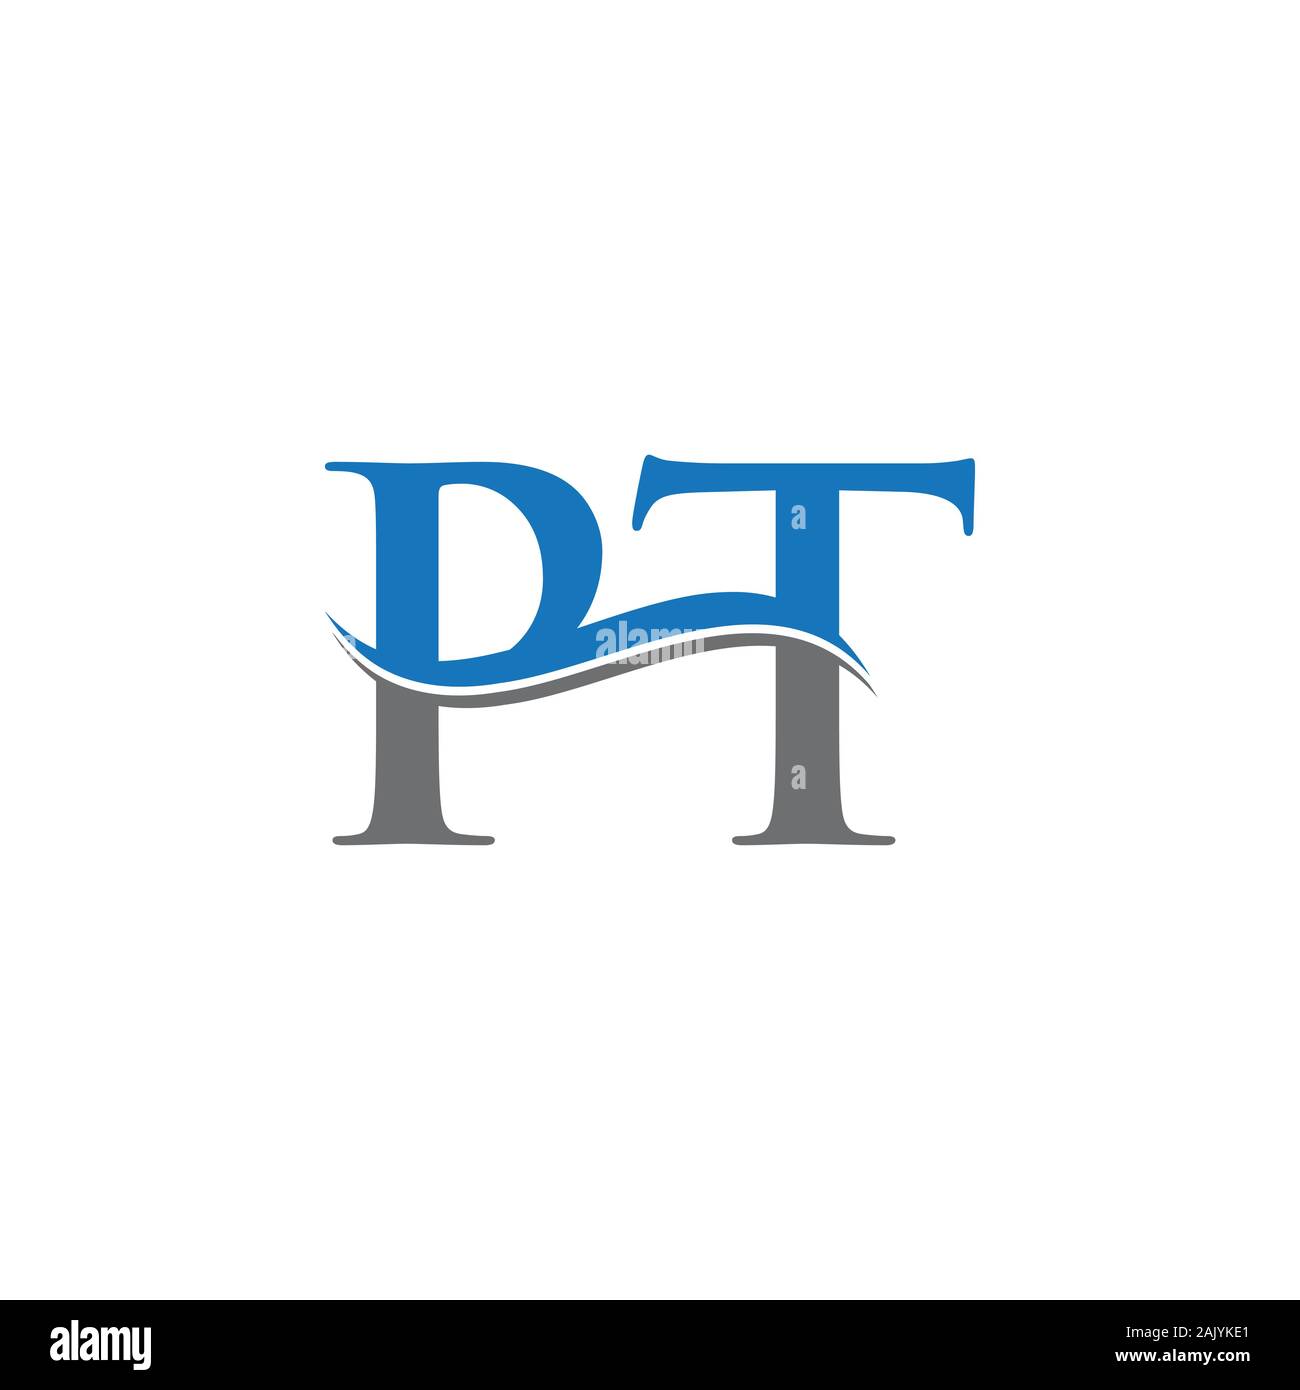 Lettera iniziale PT Logo Design template vettoriale. Lettera di PT Logo Design Illustrazione Vettoriale